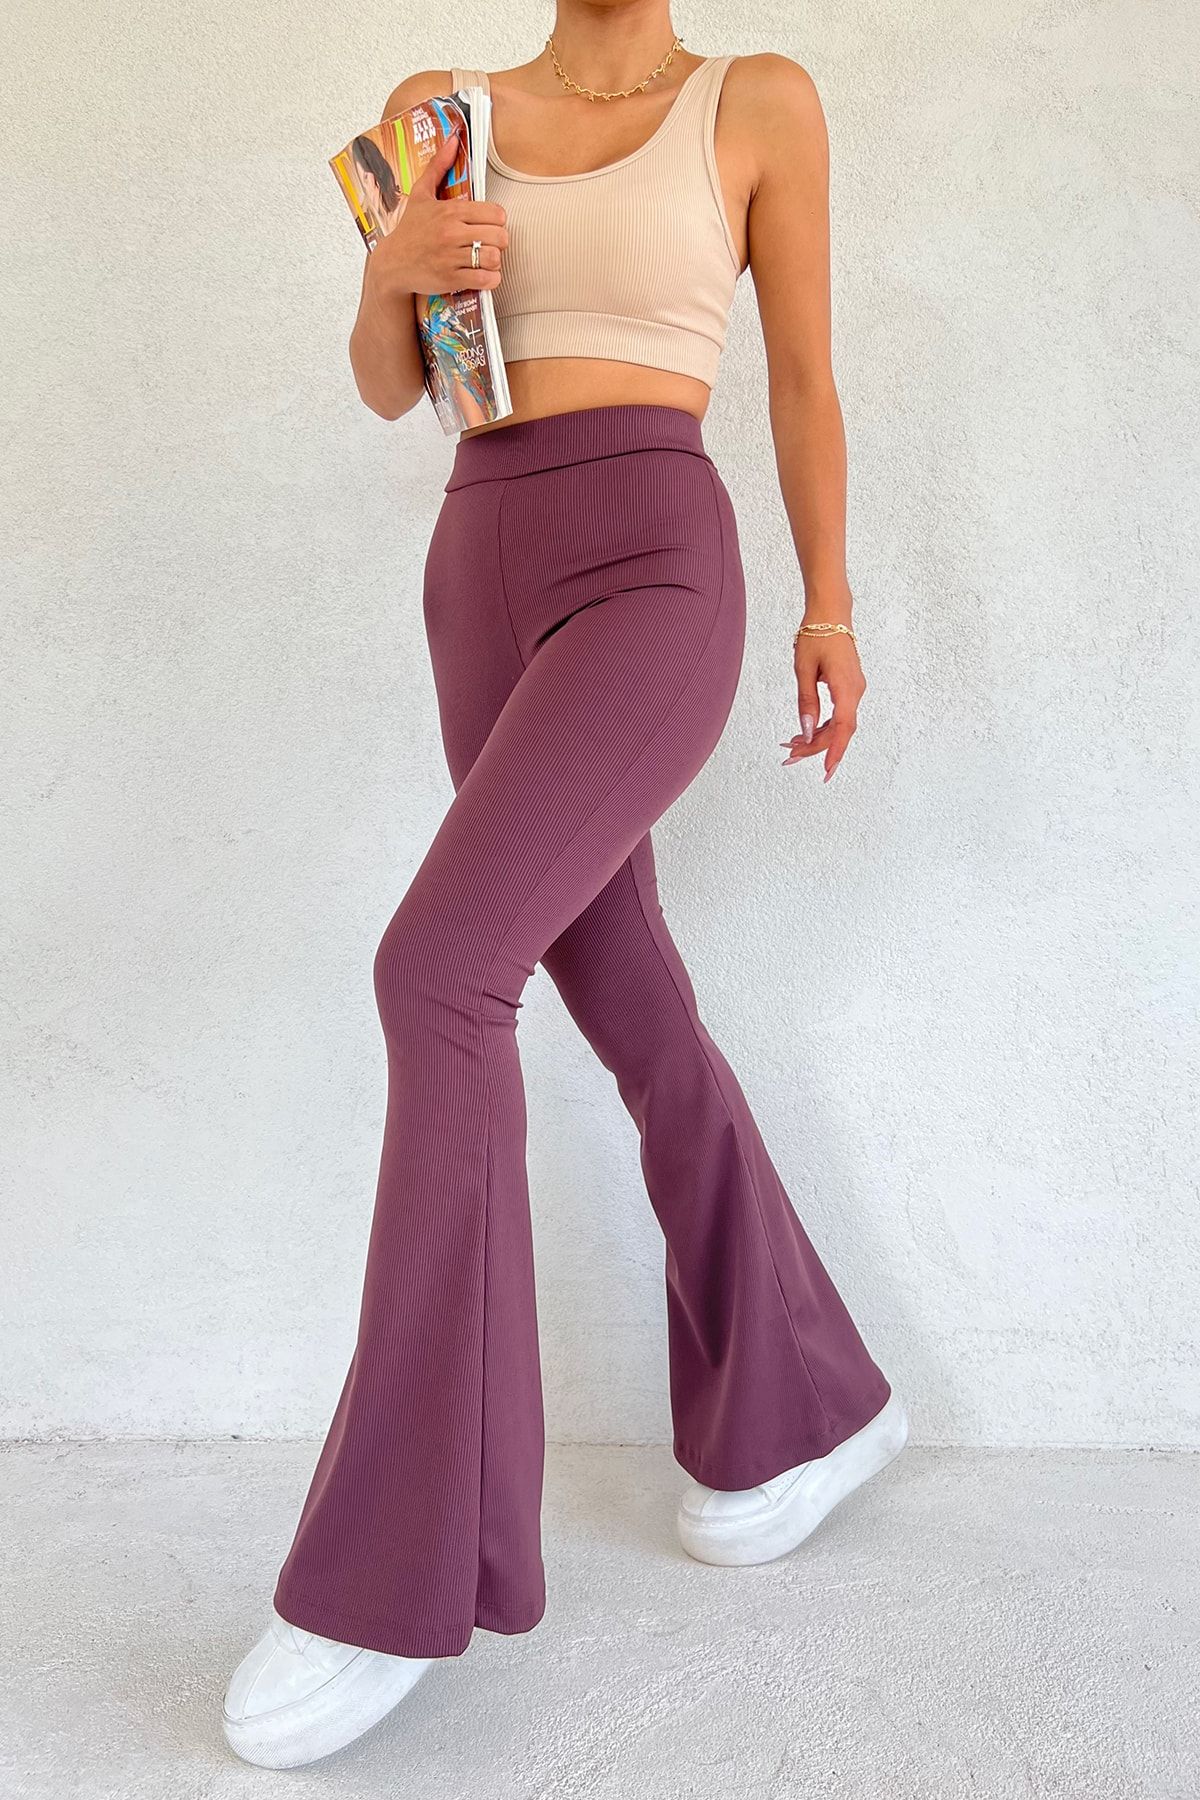 VOSSAX Kadın Kahverengi Fitilli Ispanyol Paça Yüksek Bel Toparlayıcı Pantolon Tayt